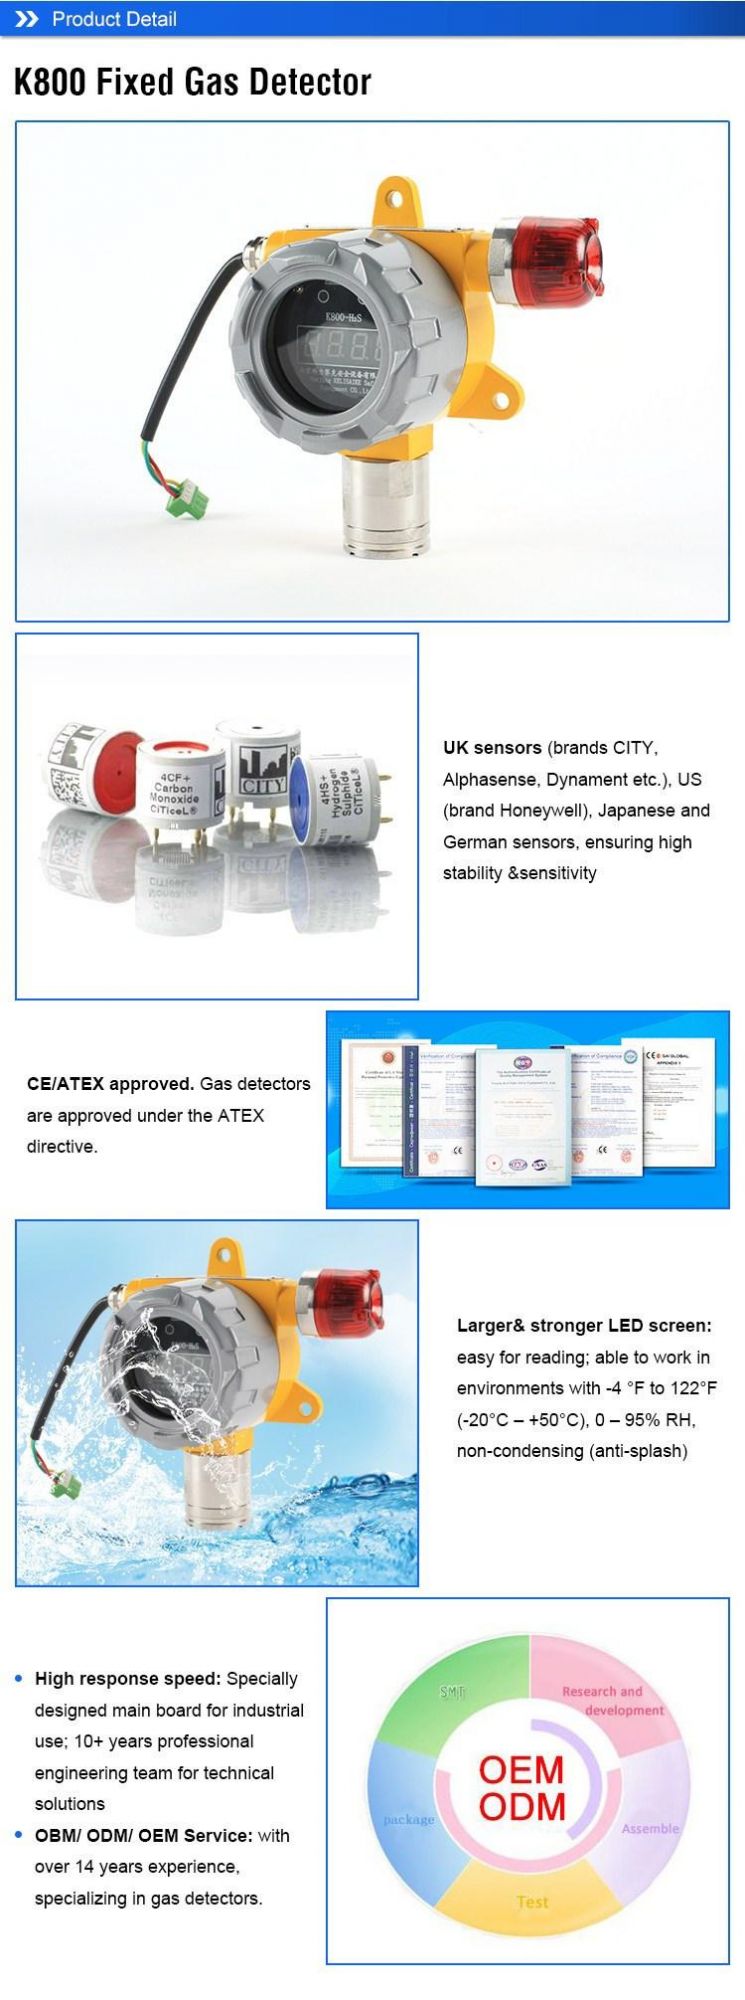 CE Certified K800 Series Fixed LPG Gas Detector